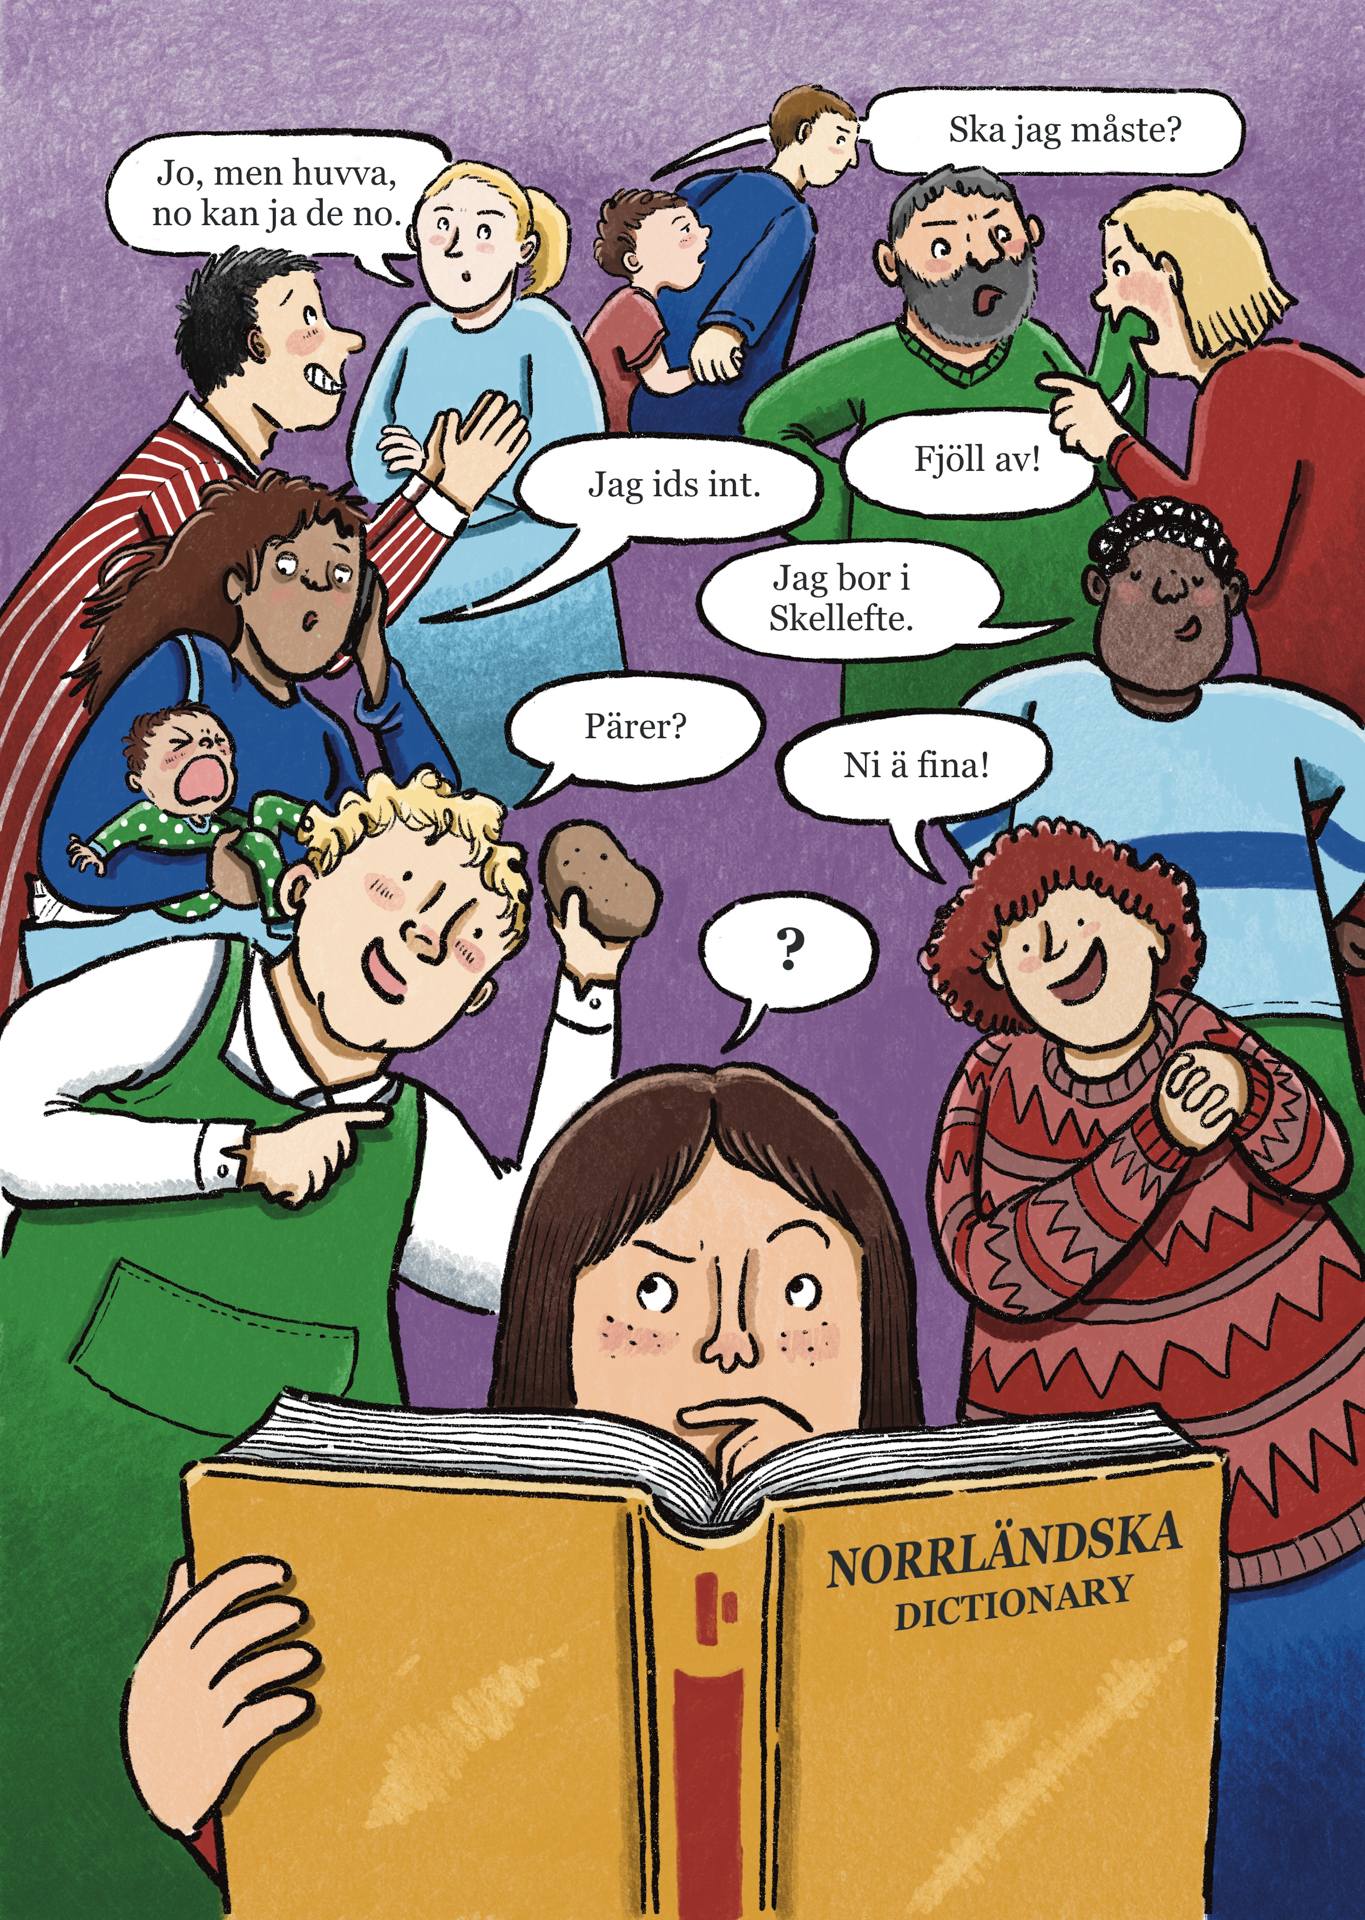 Your Norrländska Dictionary—Learn the Swedish spoken in Norrland!